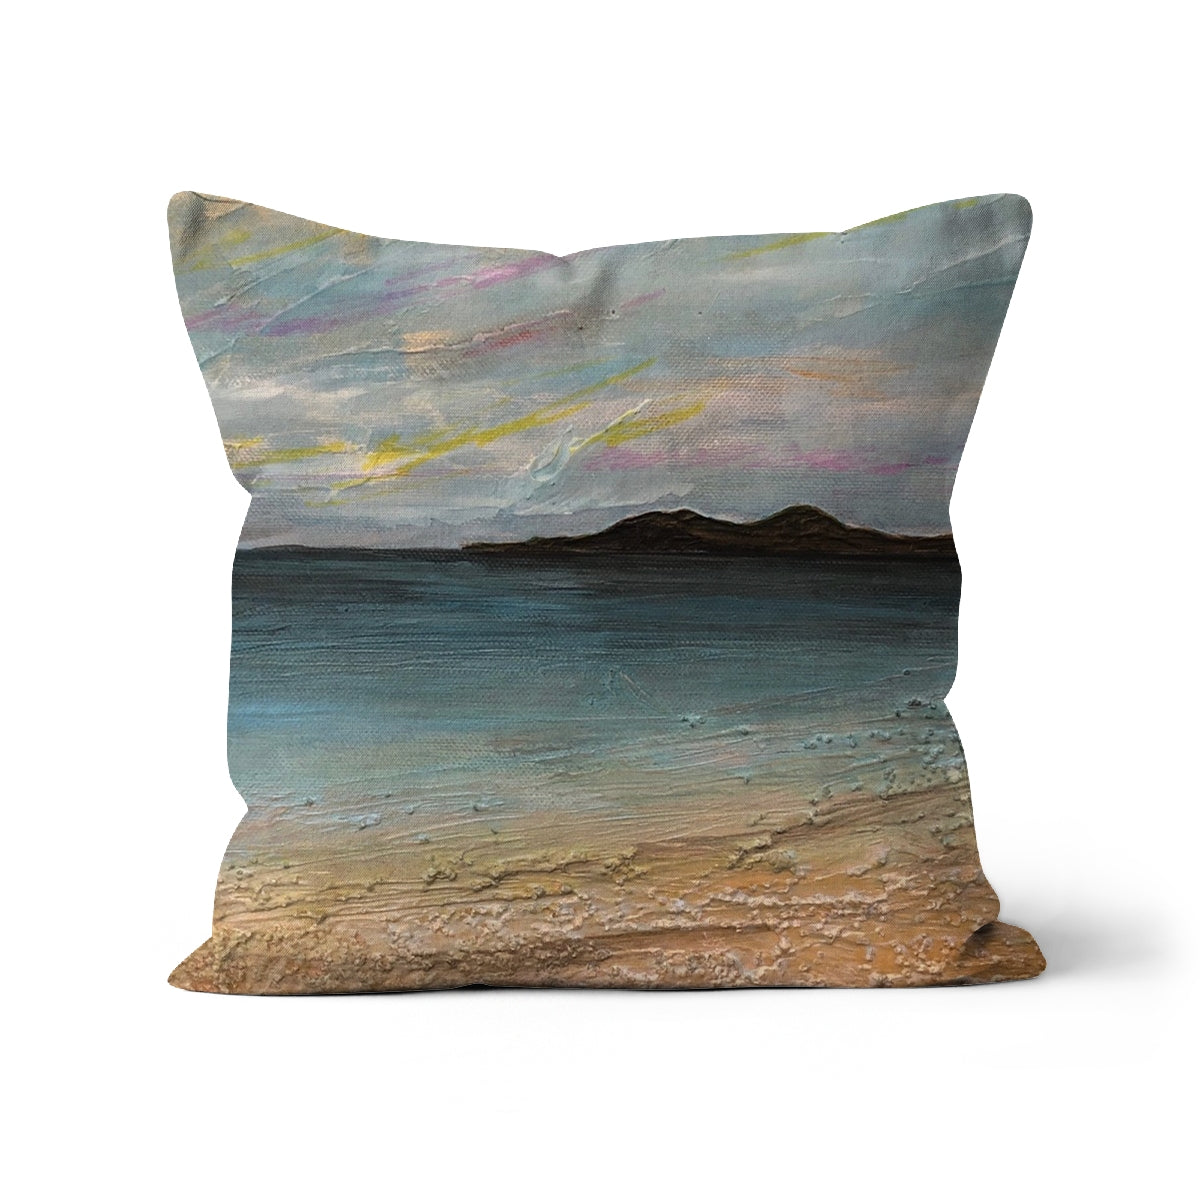 Garrynamonie Beach South Uist Art Gifts Cushion-Cushions-Hebridean Islands Art Gallery-Linen-16"x16"-Paintings, Prints, Homeware, Art Gifts From Scotland By Scottish Artist Kevin Hunter